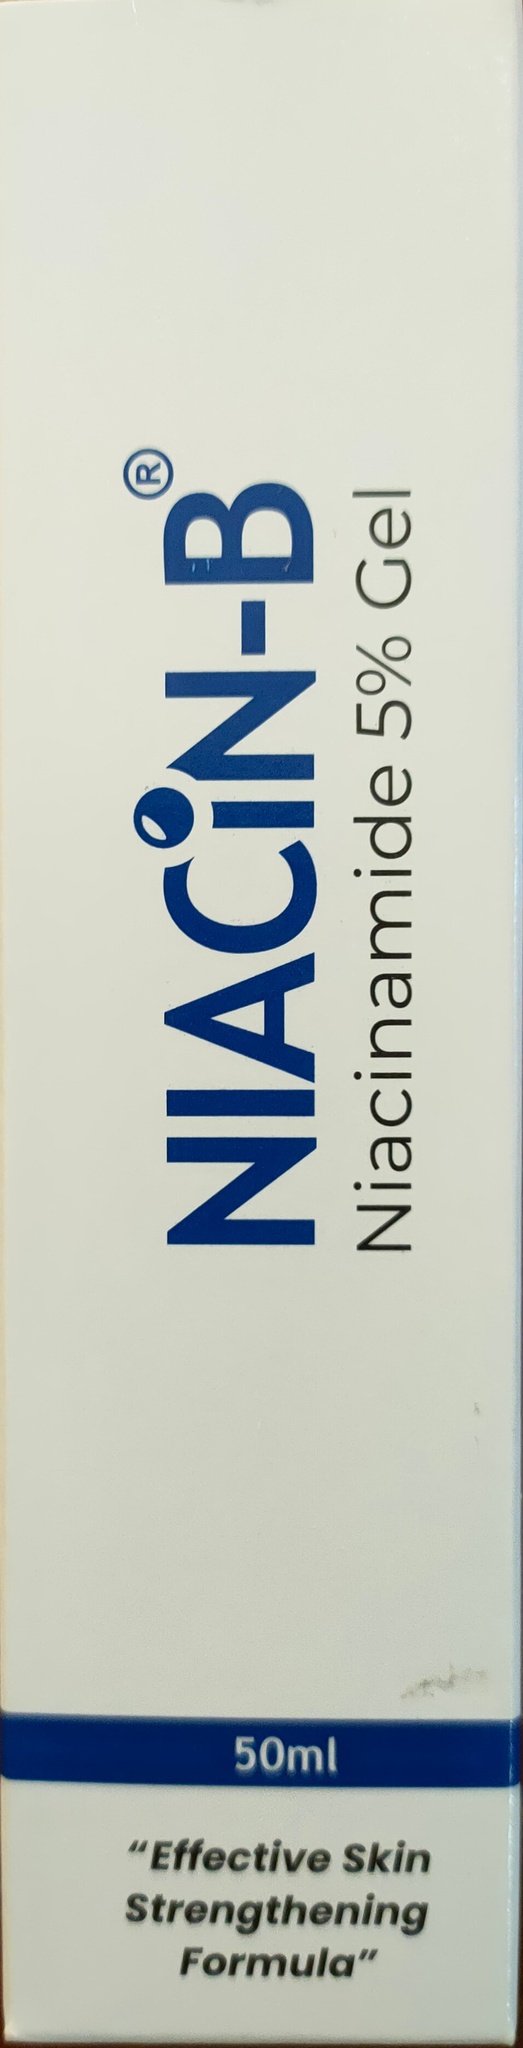 Niacin-B Niacinamide 5% Gel